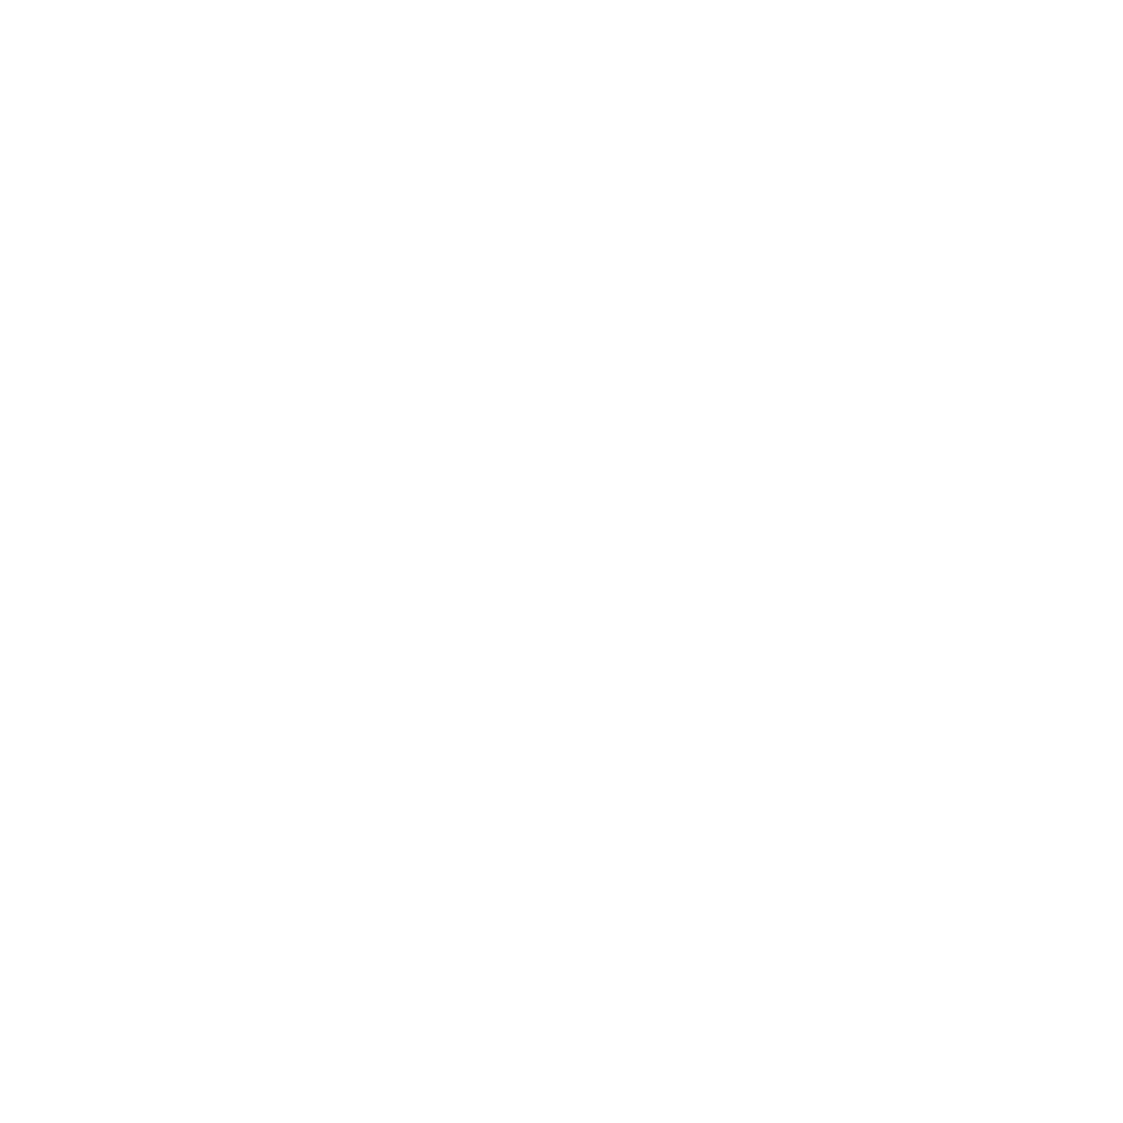 60th Anniversary logo